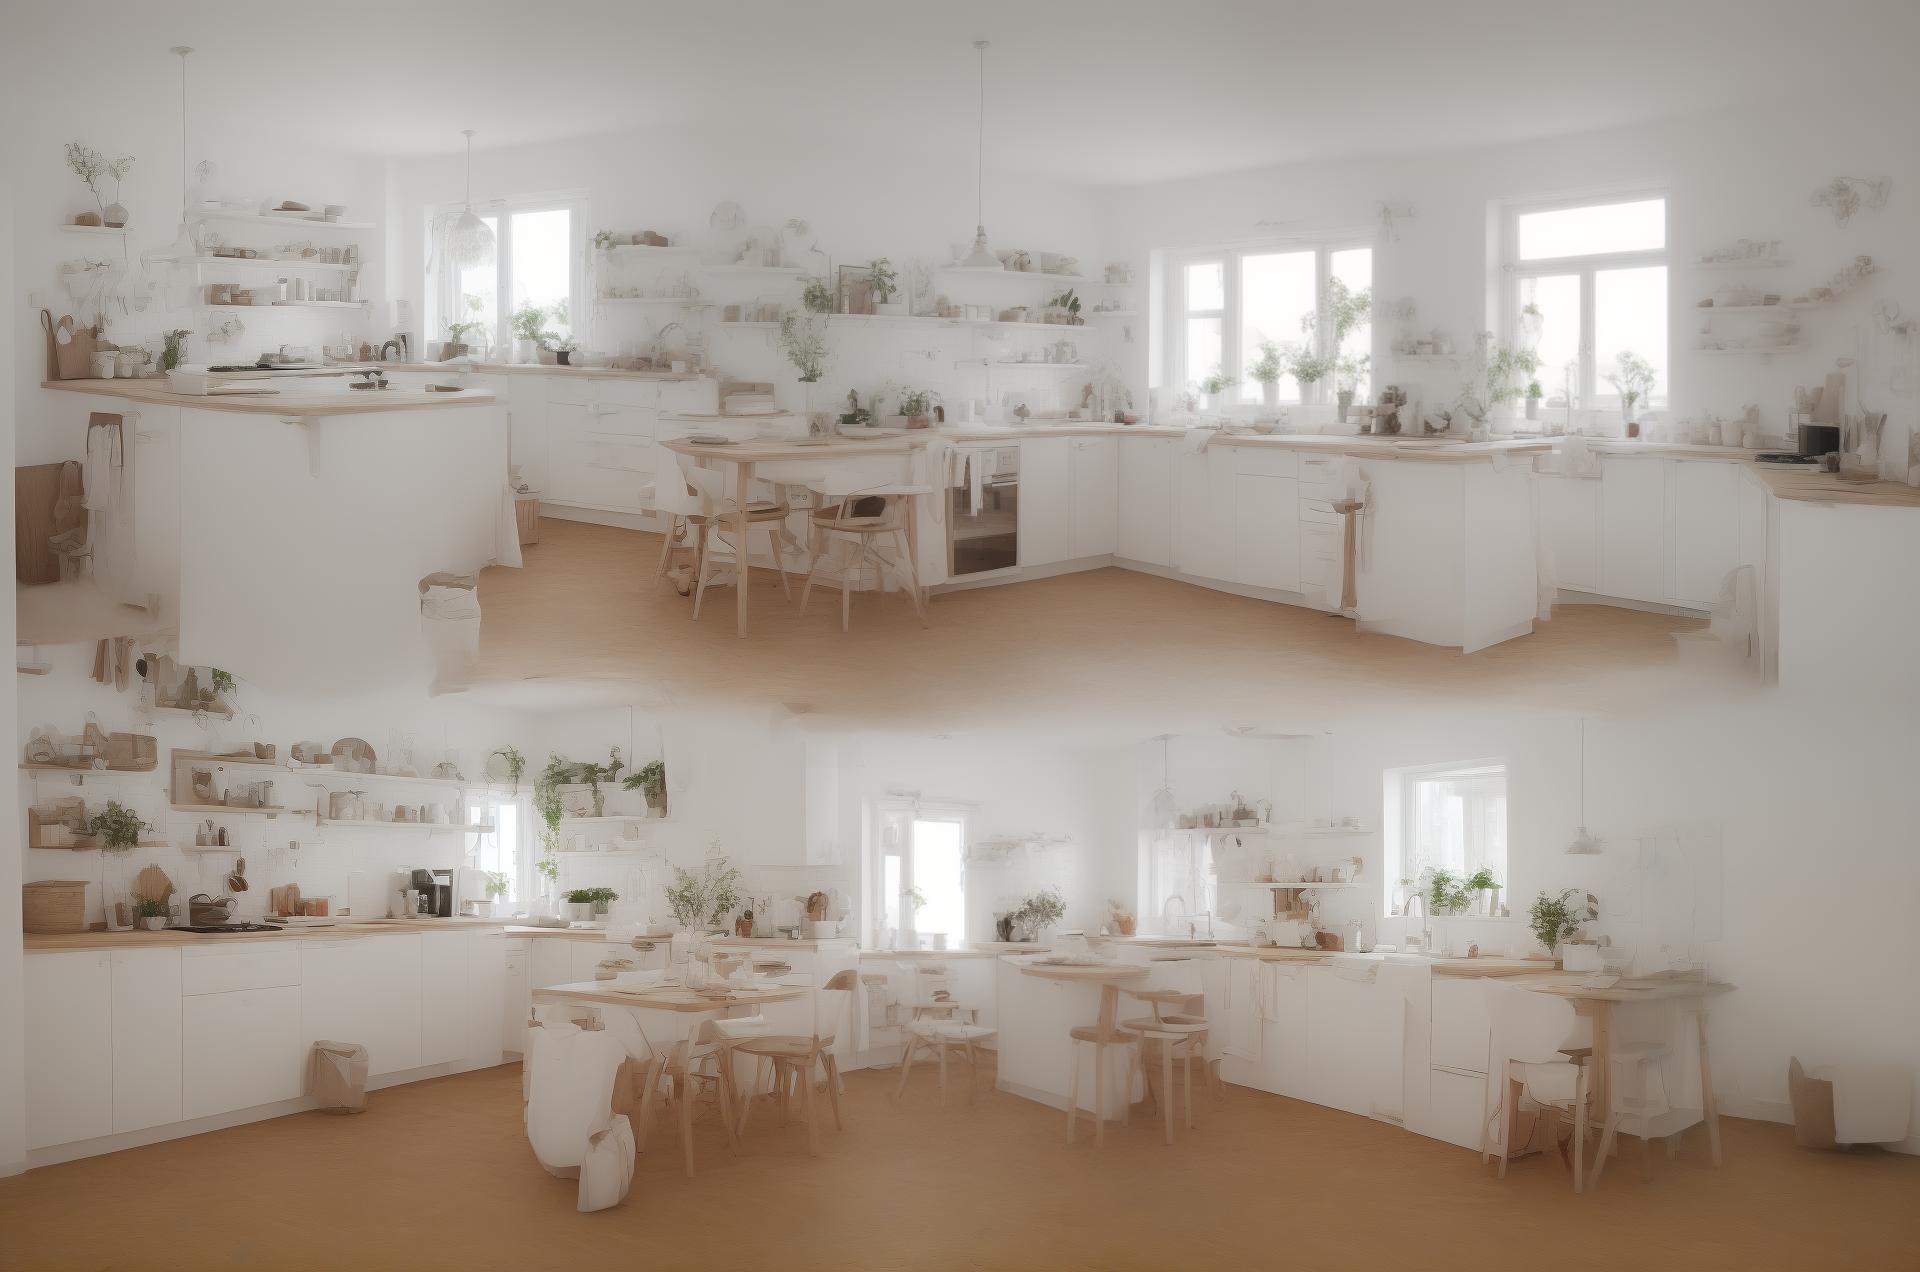  Scandinavian kitchen